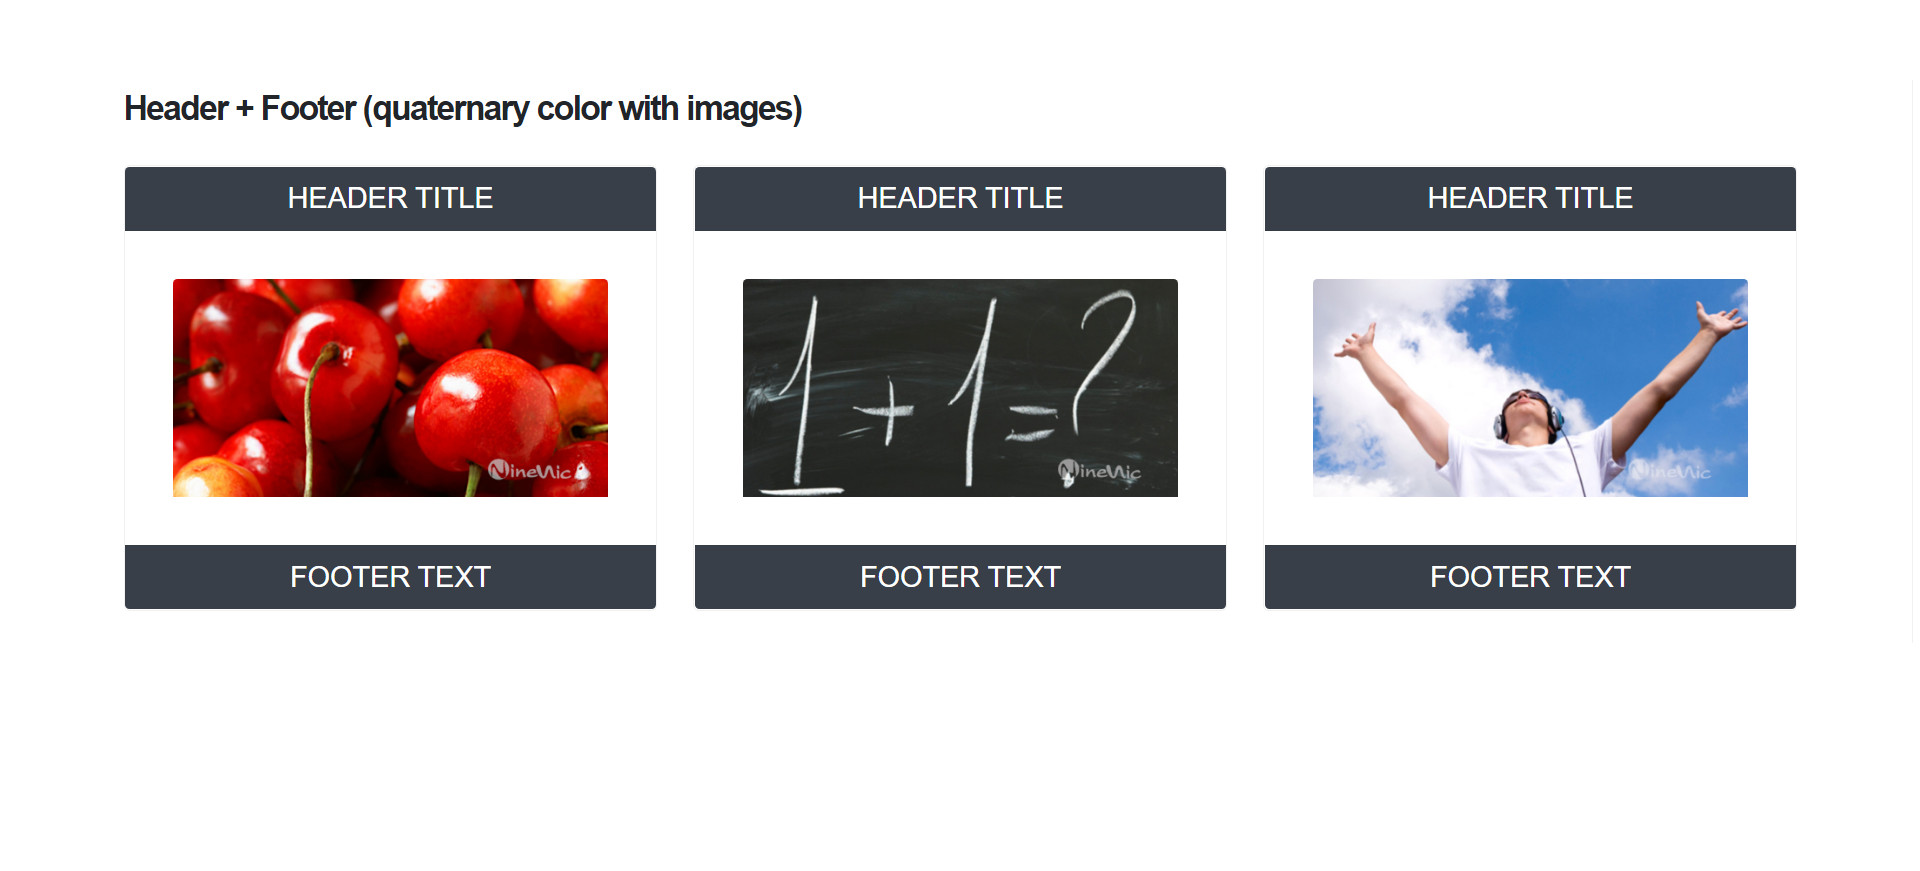 Shortcodes cards - header footer color quaternary and image แนะนำ เว็บไซต์สำเร็จรูป NineNIC